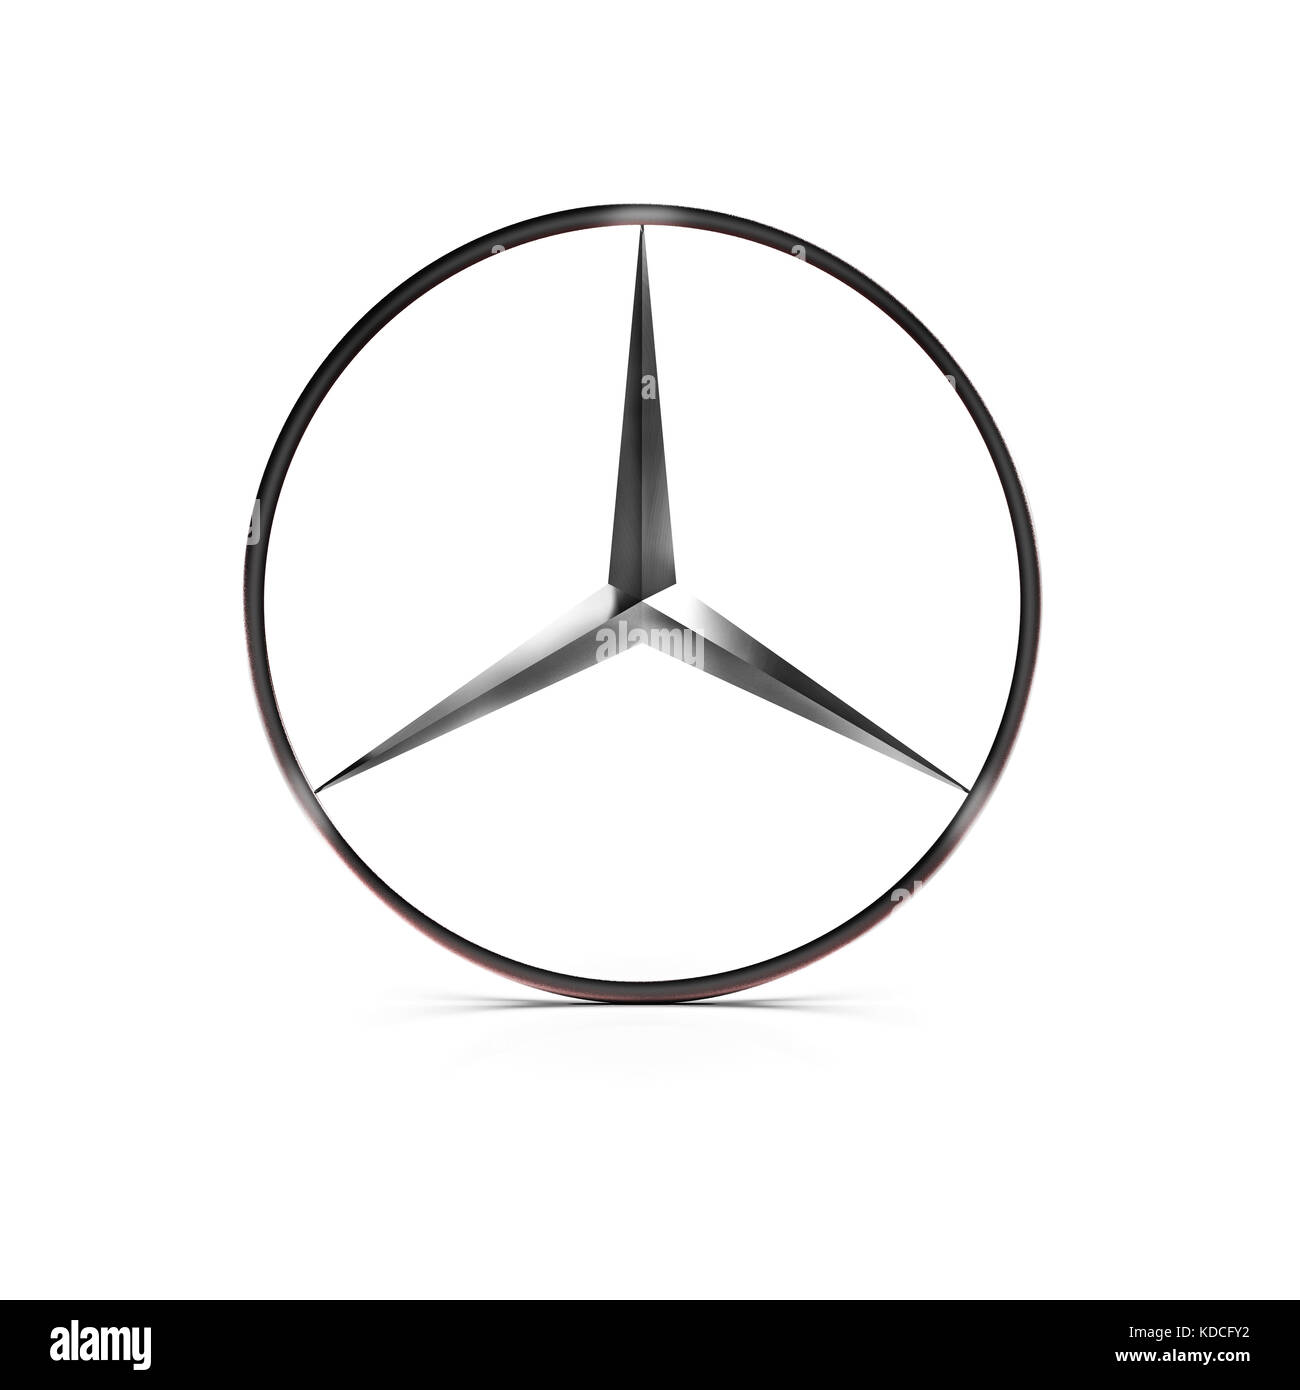 Mercedes logo Stock Photos, Royalty Free Mercedes logo Images